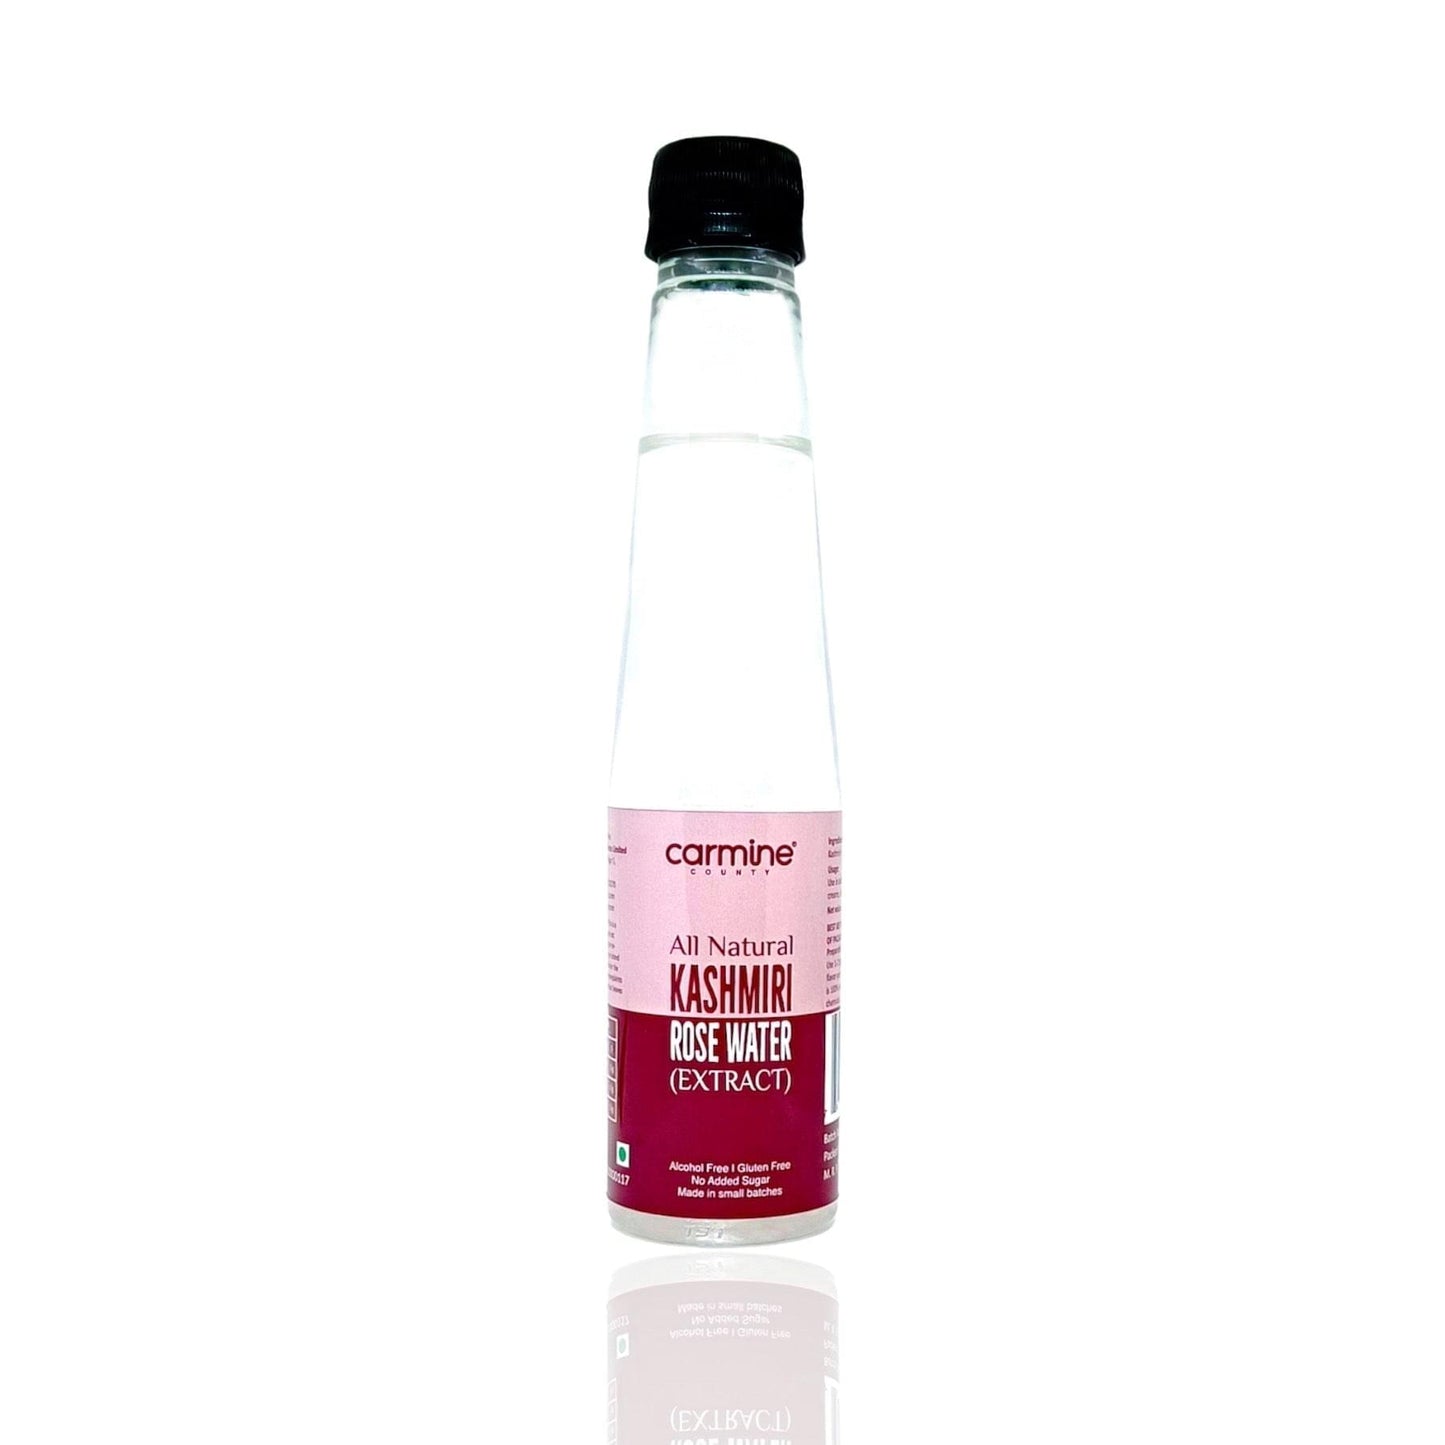 Carmine County All Natural Premium Kashmiri Rose Water